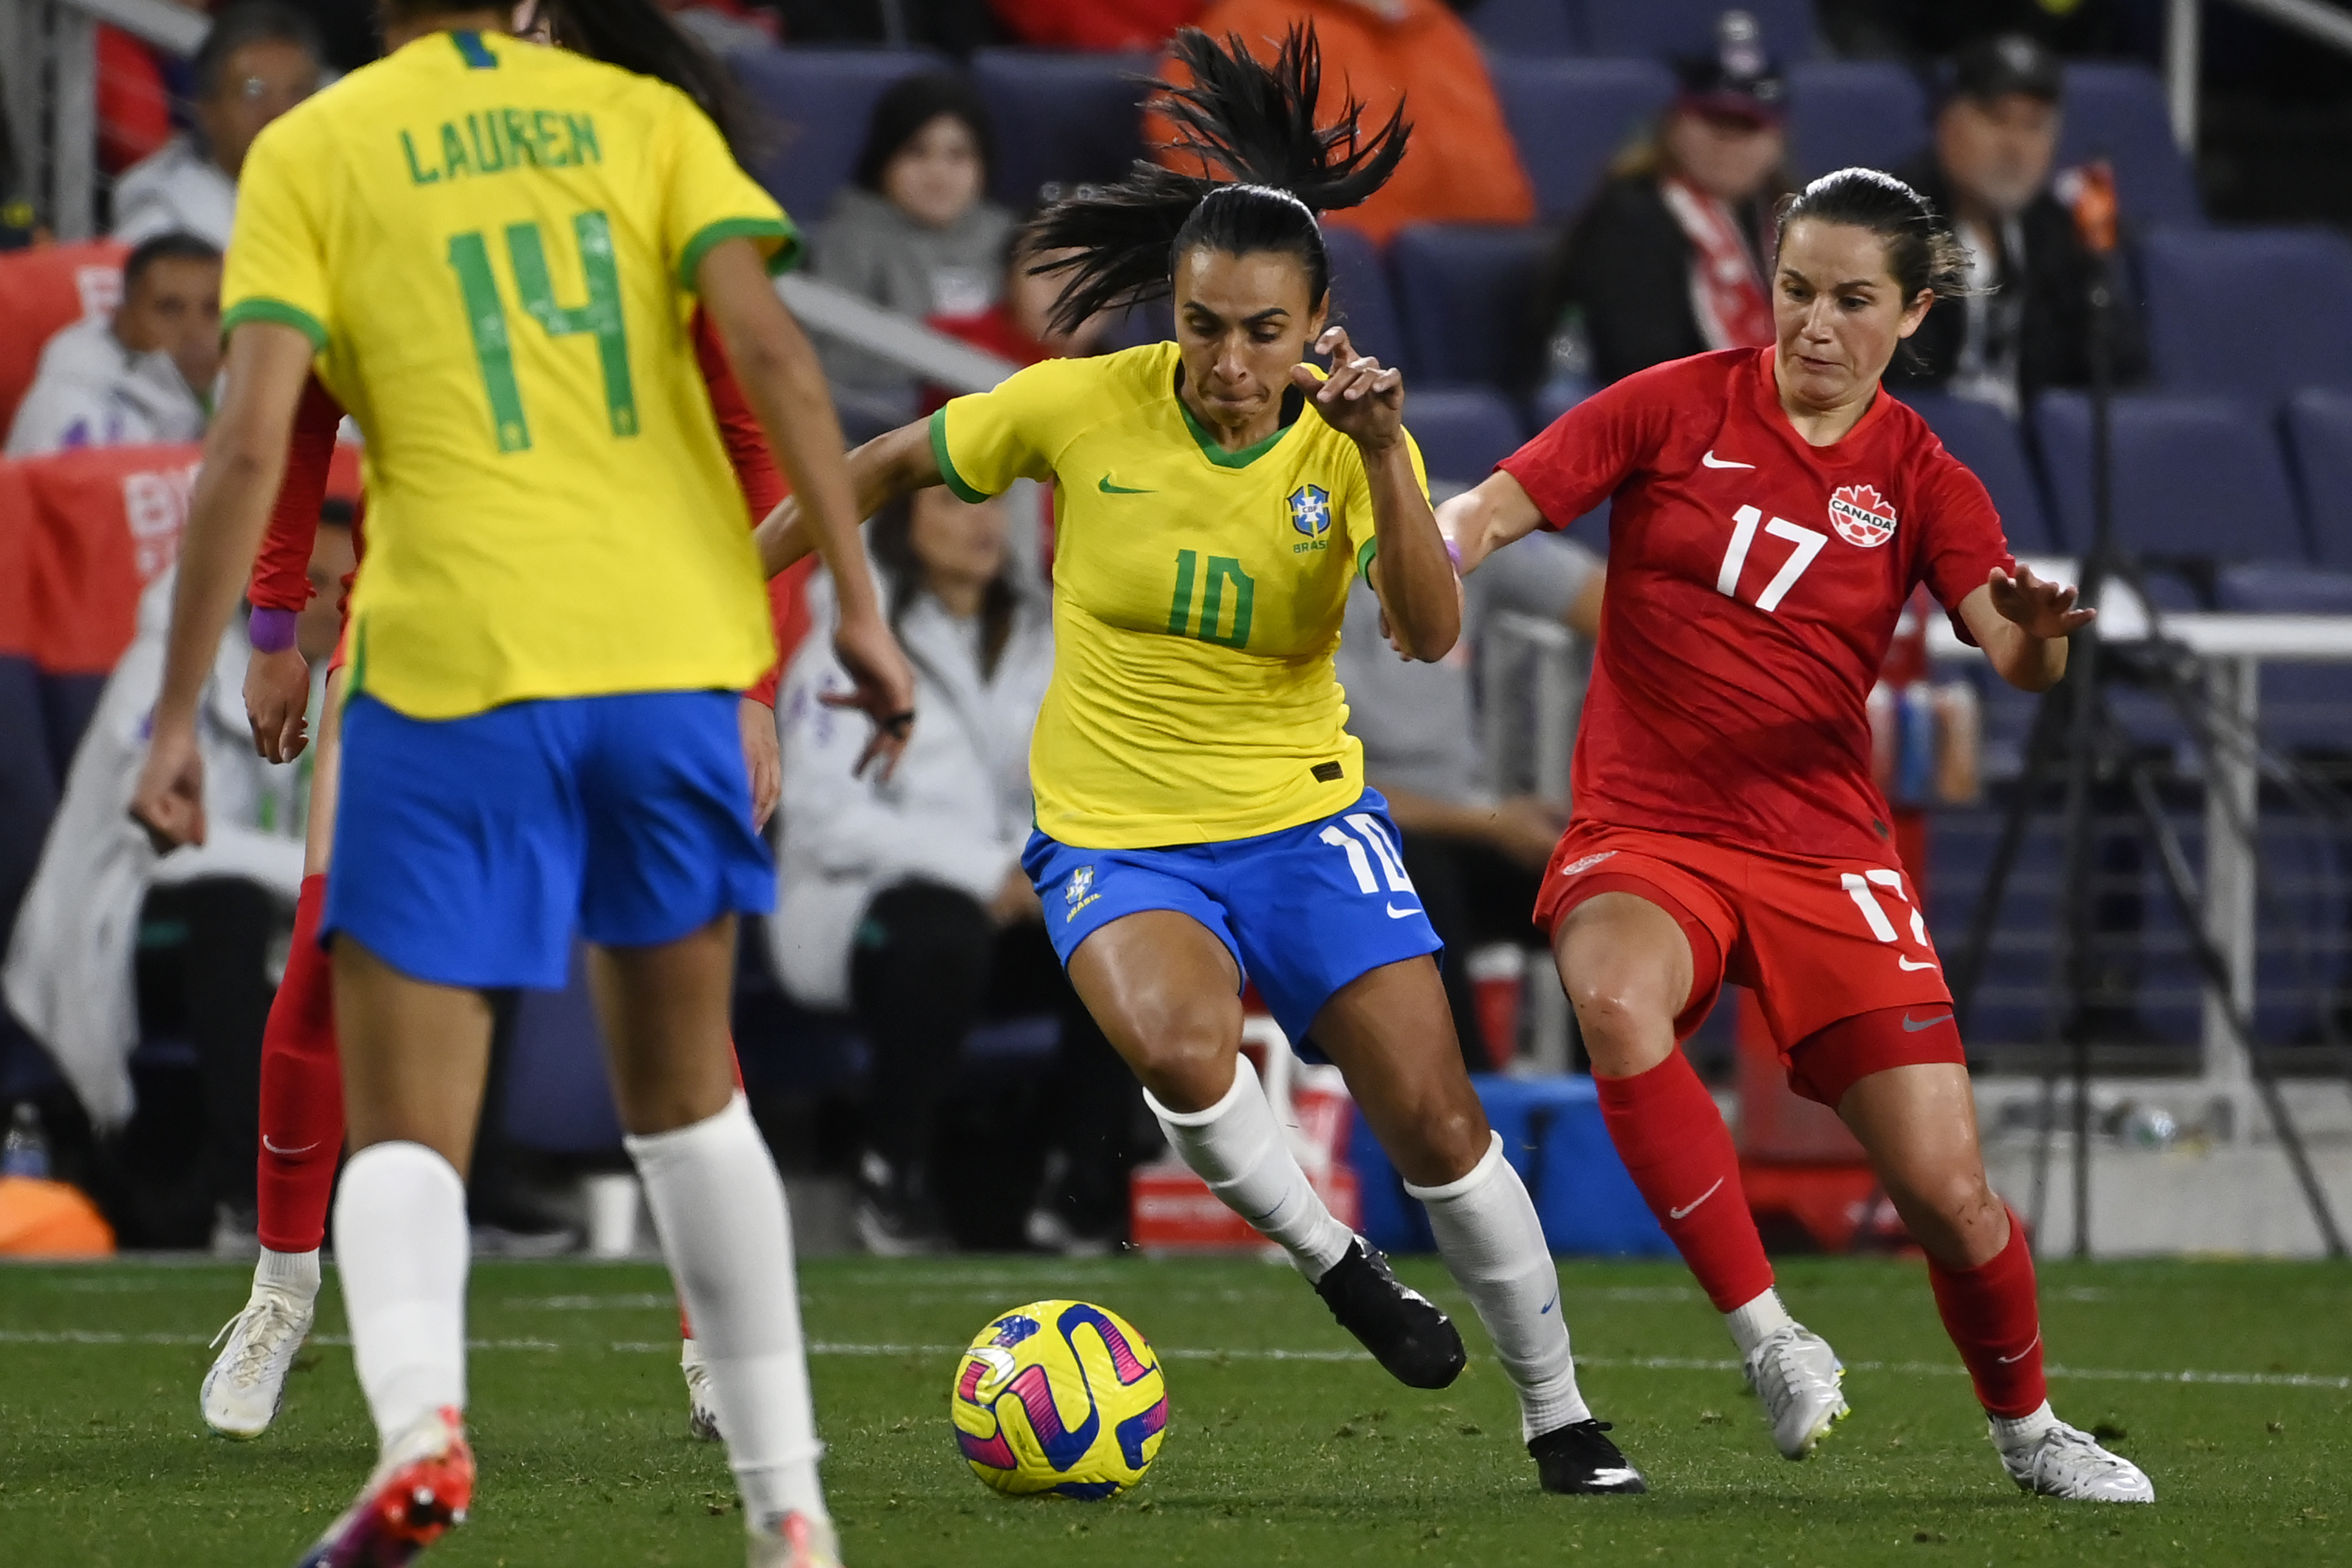 Telemundo Kicks Off FIFA Women's World Cup Australia & New Zealand